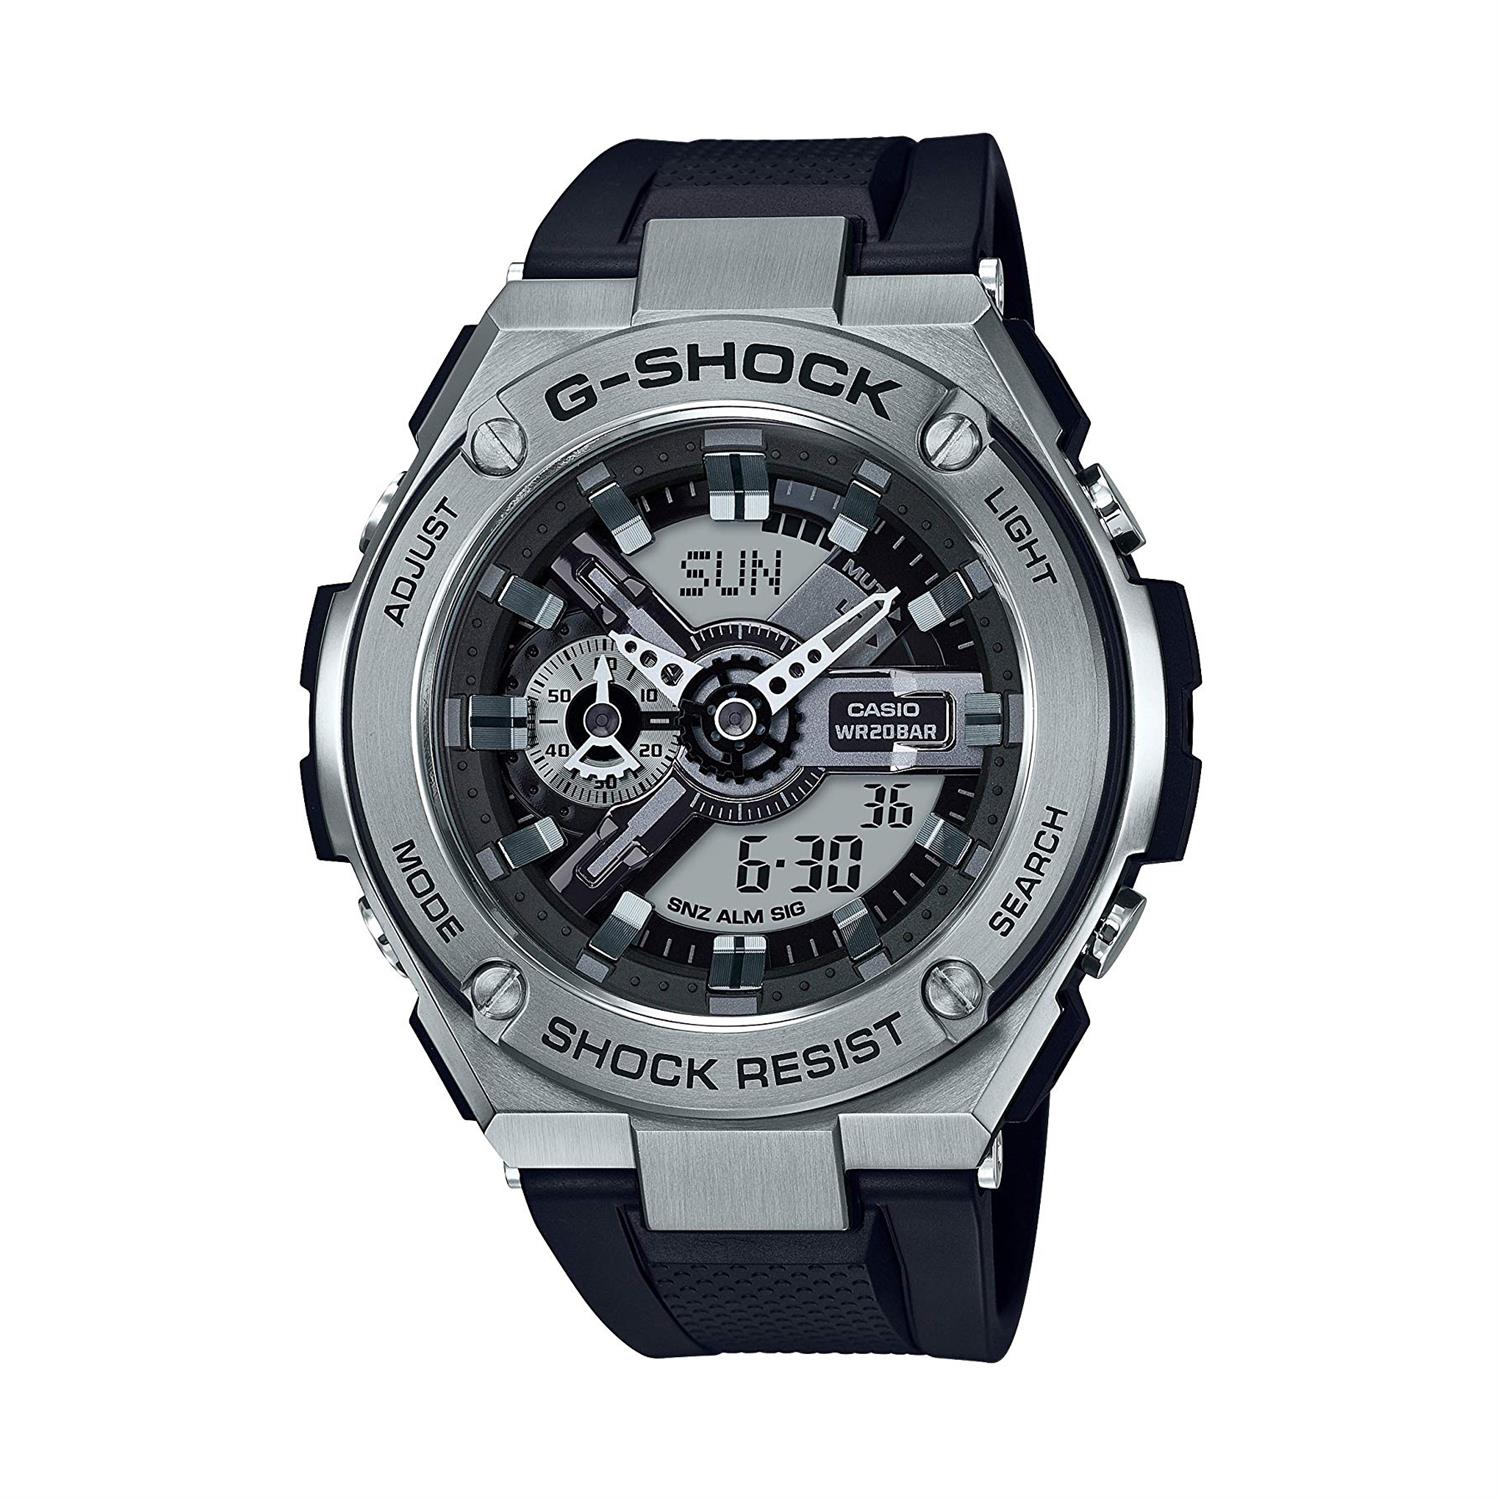 ساعت مچی مردانه G-Shock کاسیو با کد GST-410-1ADR